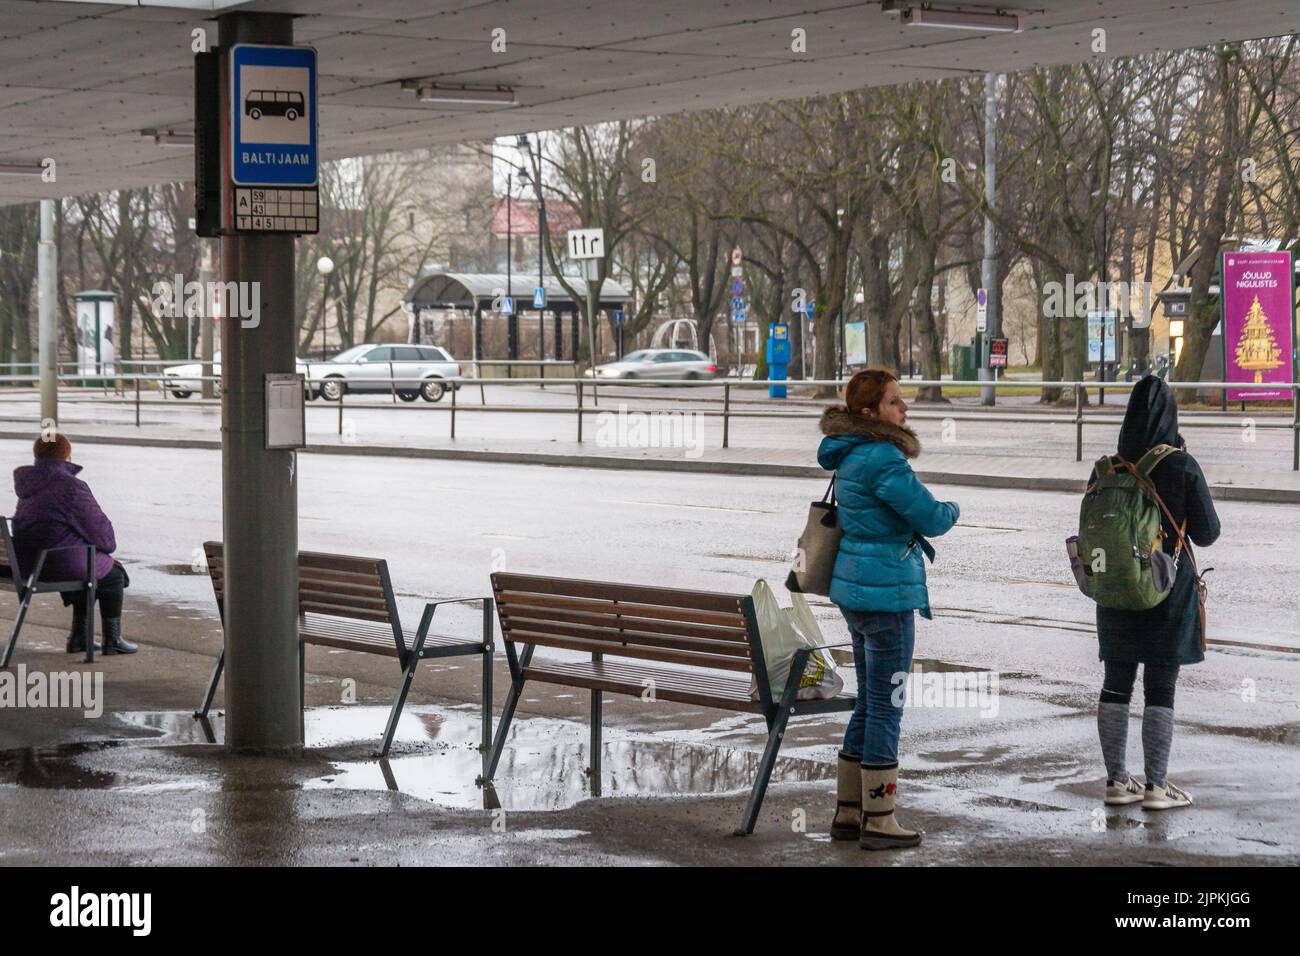 People waiting for bus at Balti jaam bus stop in Tallinn Estonia Stock Photo